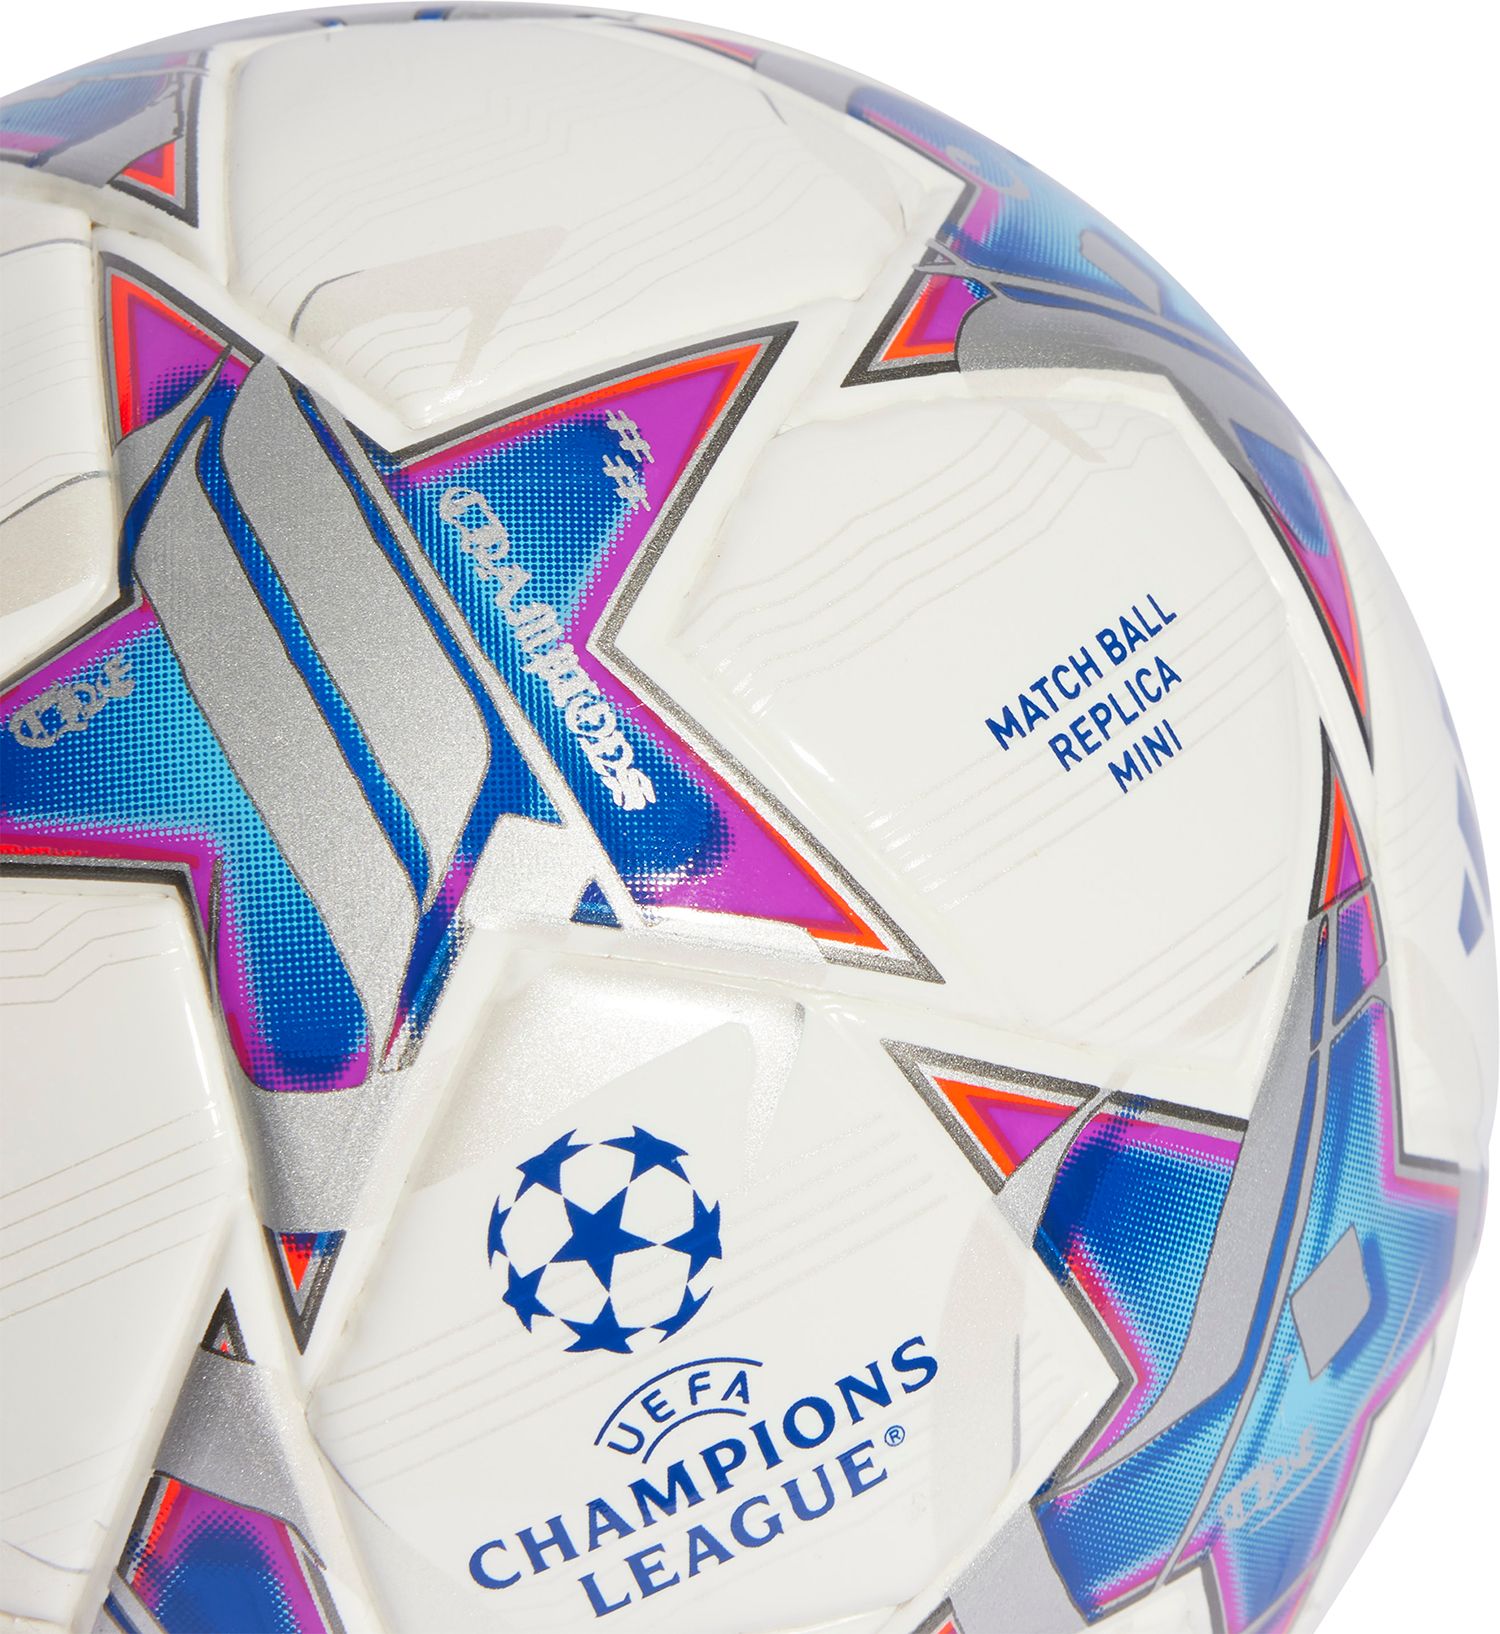 adidas UEFA Champions League 23/24 Group Stage Mini Soccer Ball